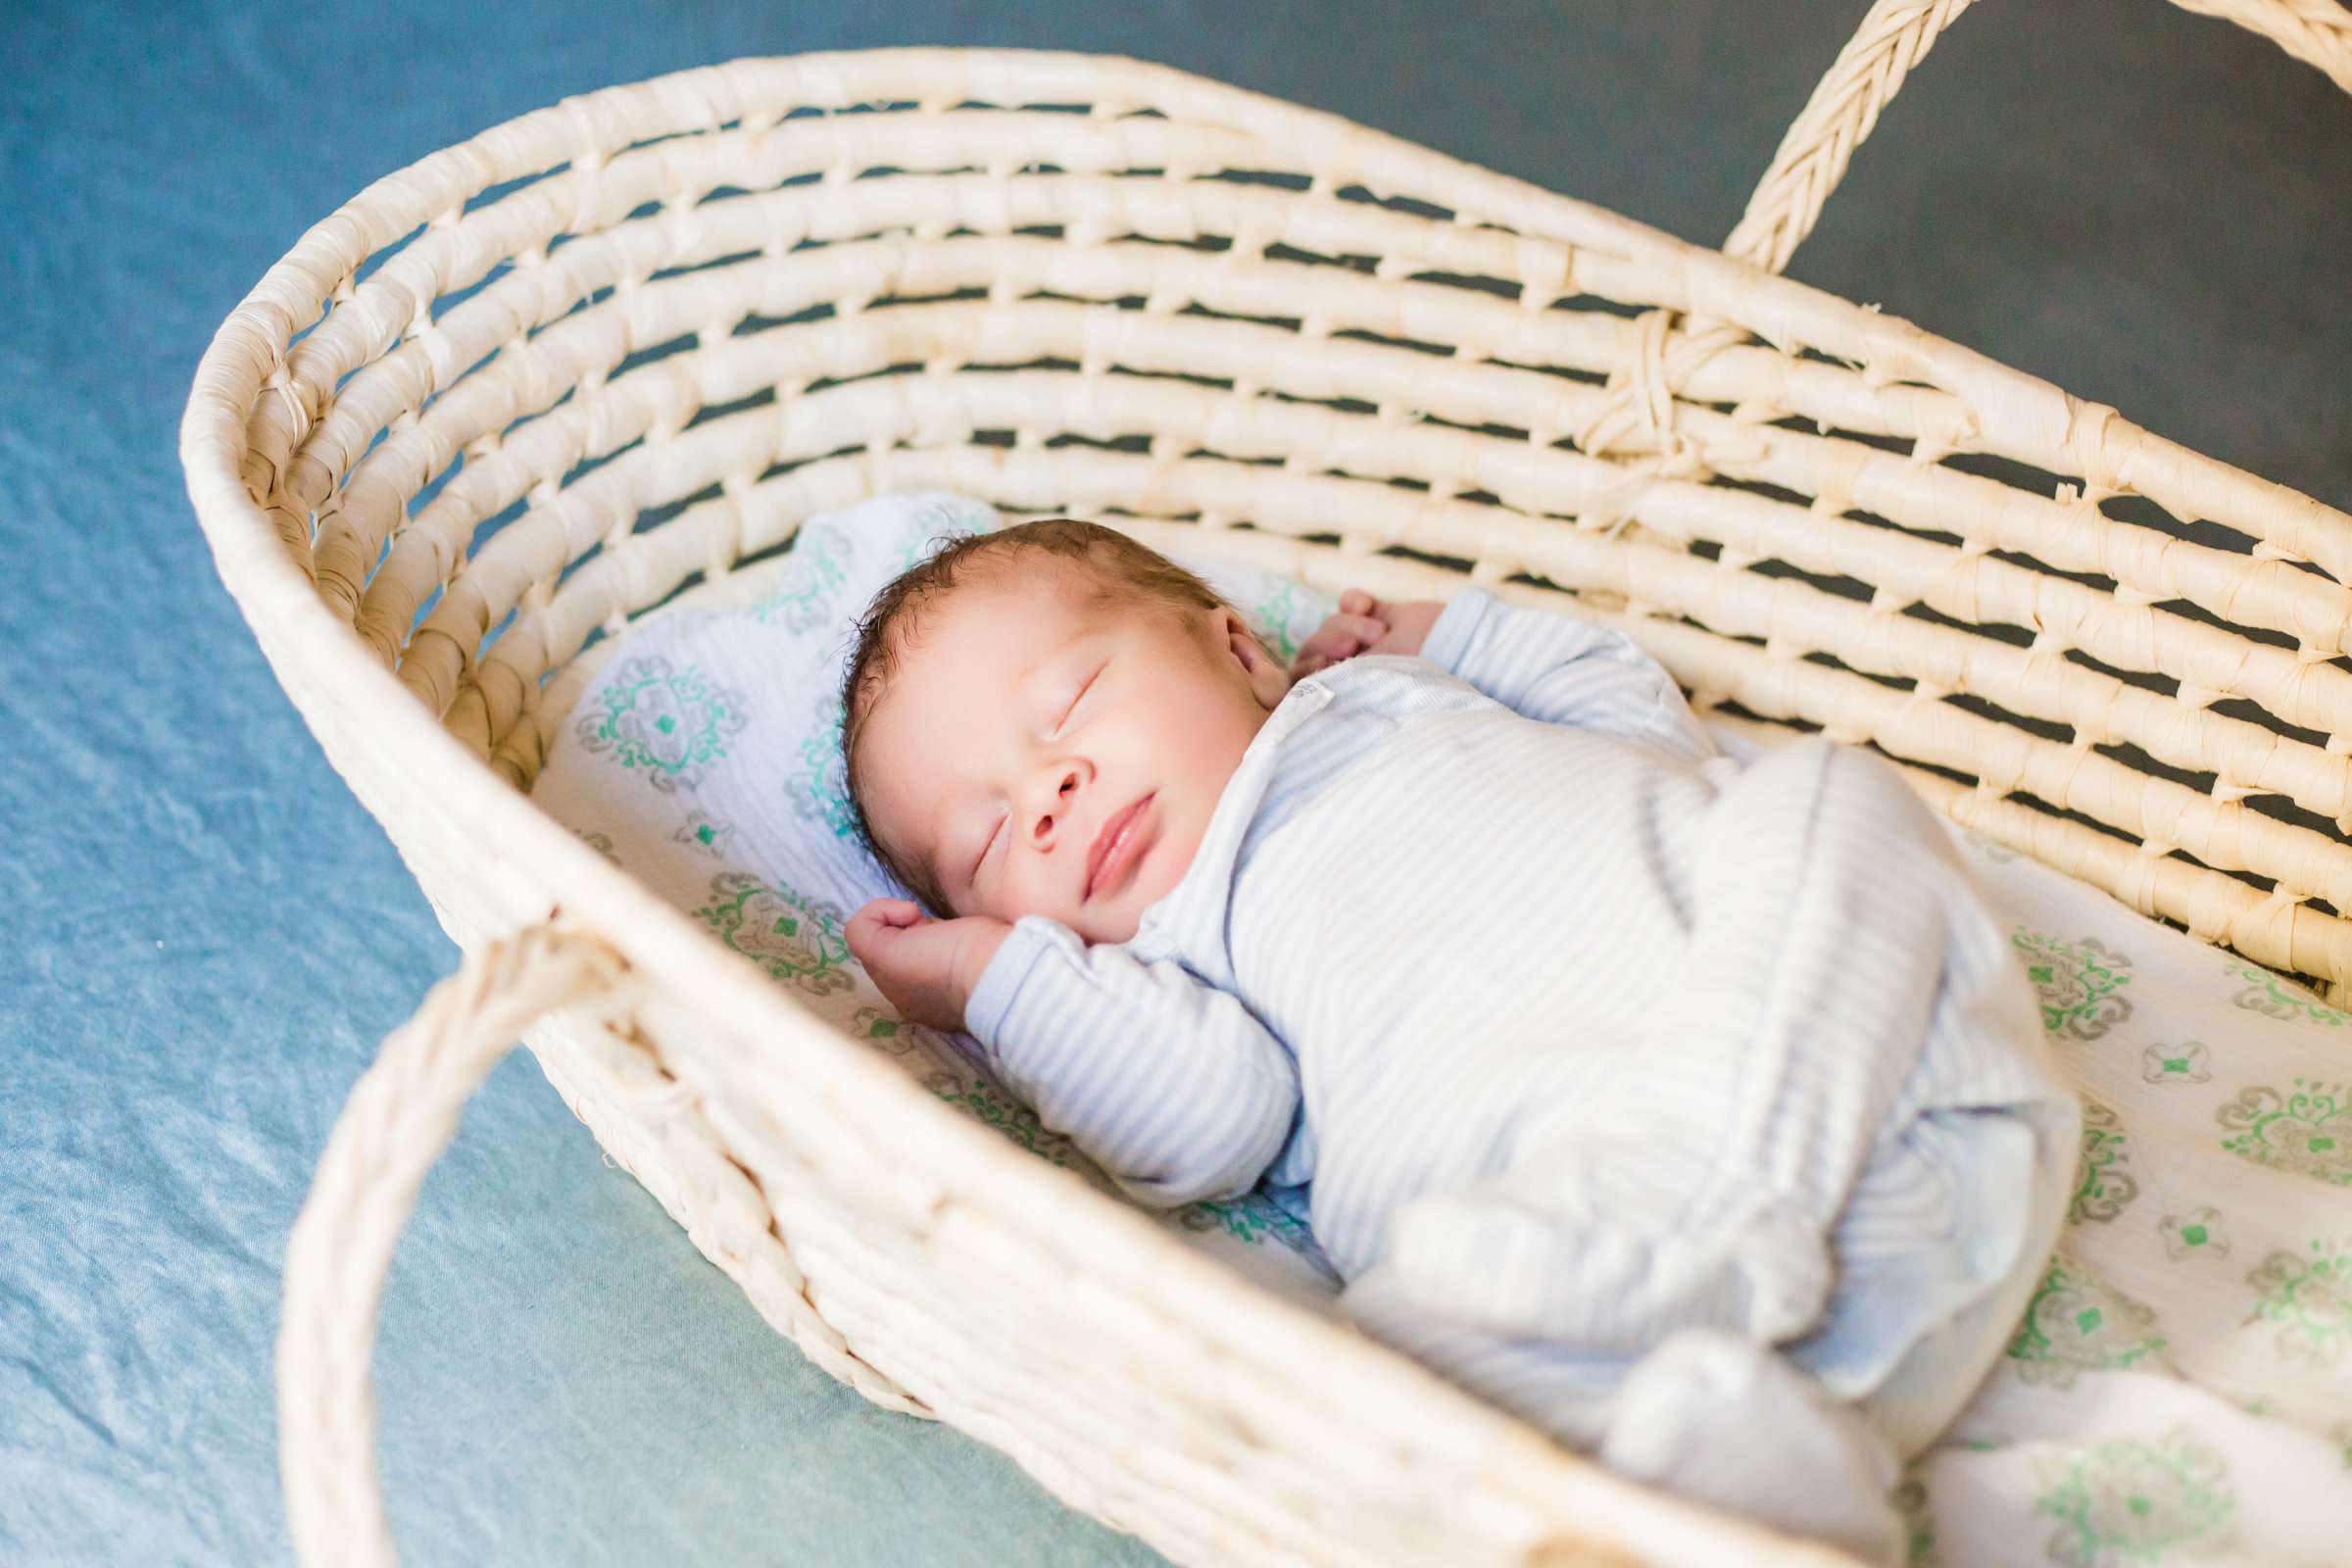 Newborn Photo Session, Kirsten Bruner Newborn Photo #1 by True Photography